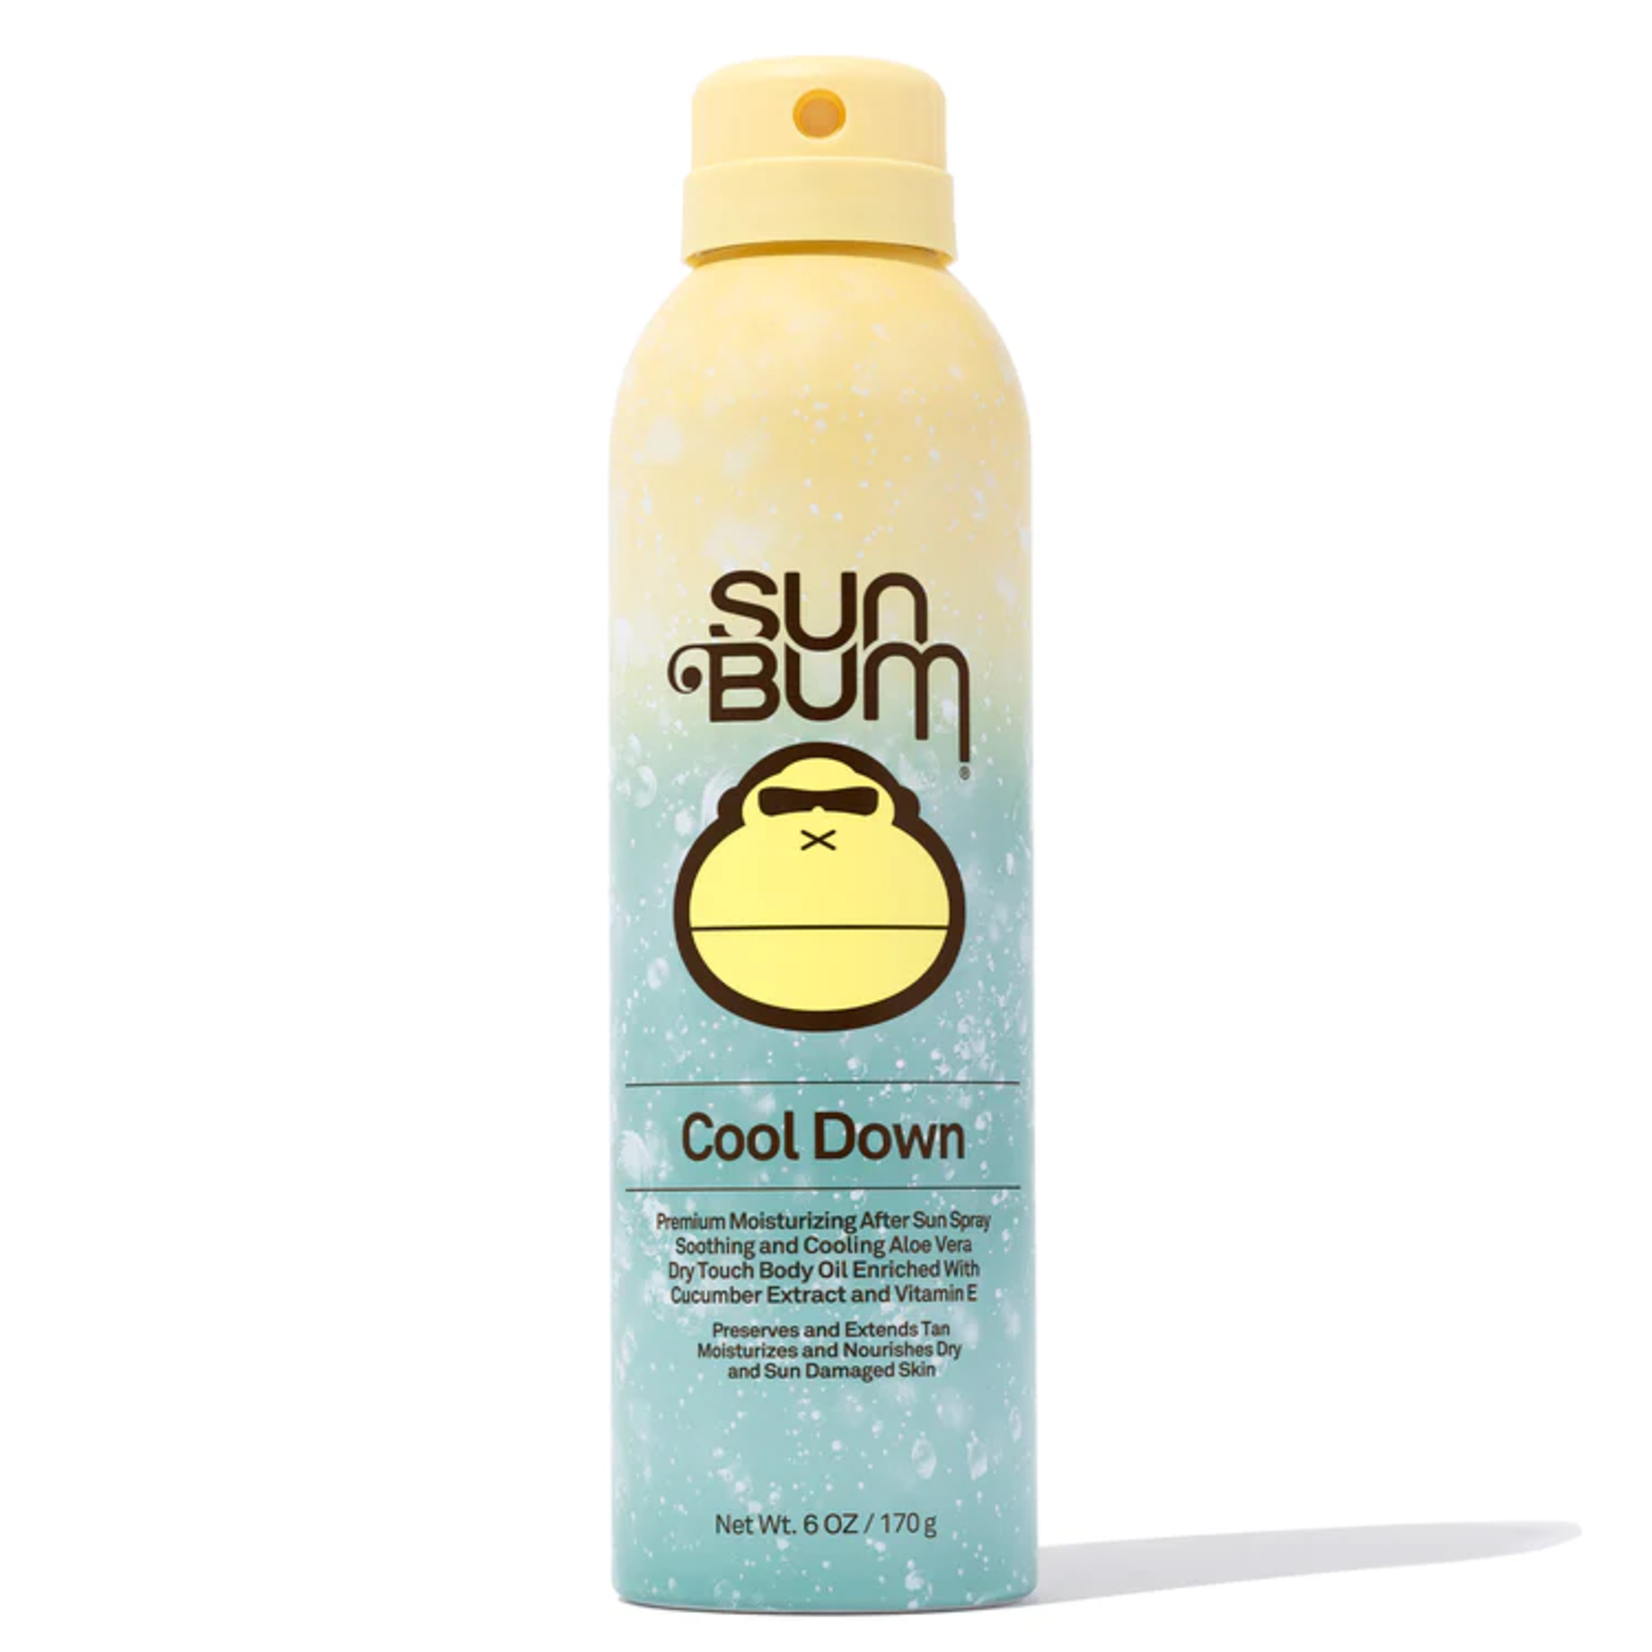 Sun Bum Sun Bum Cool Down Spray 6oz